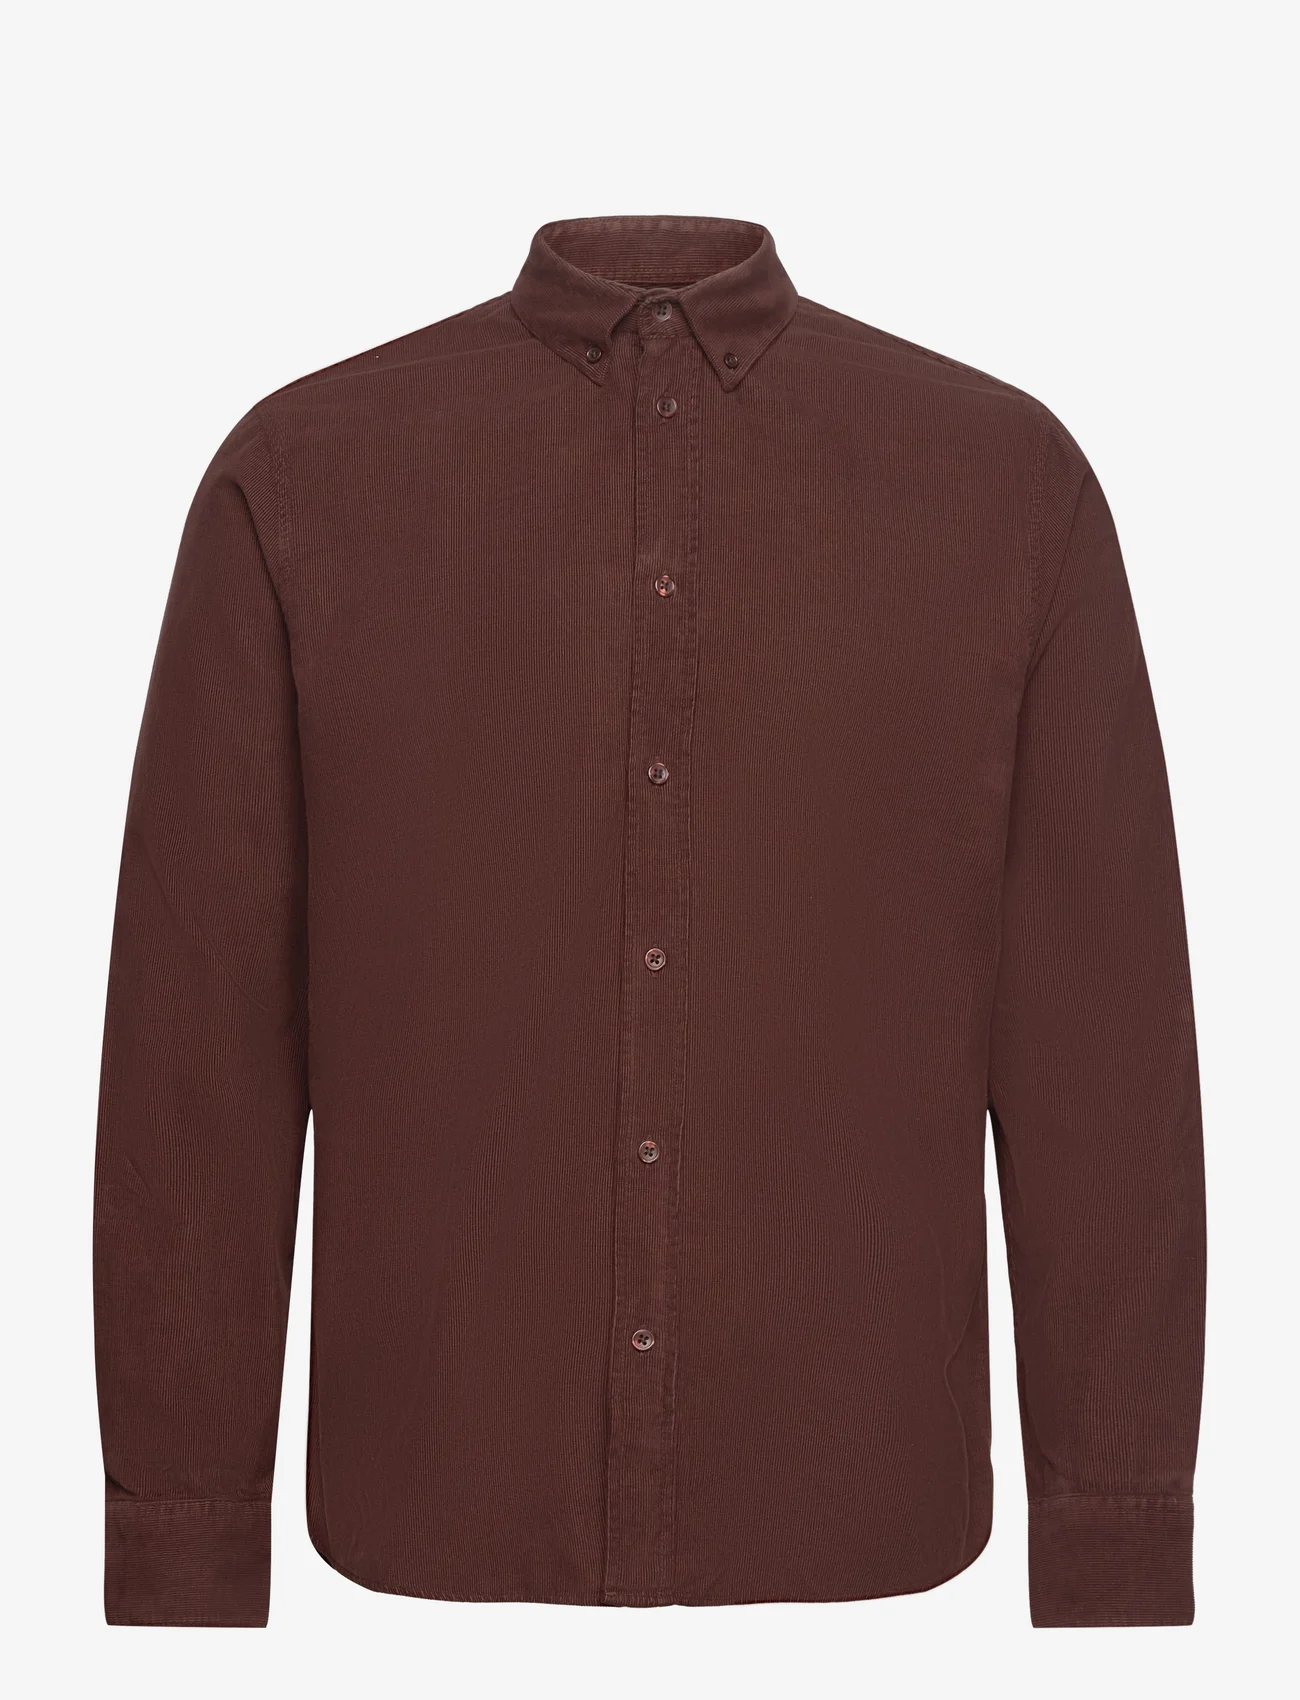 By Garment Makers - Vincent Corduroy Shirt GOTS - fløjlsskjorter - 1258 beaver - 0